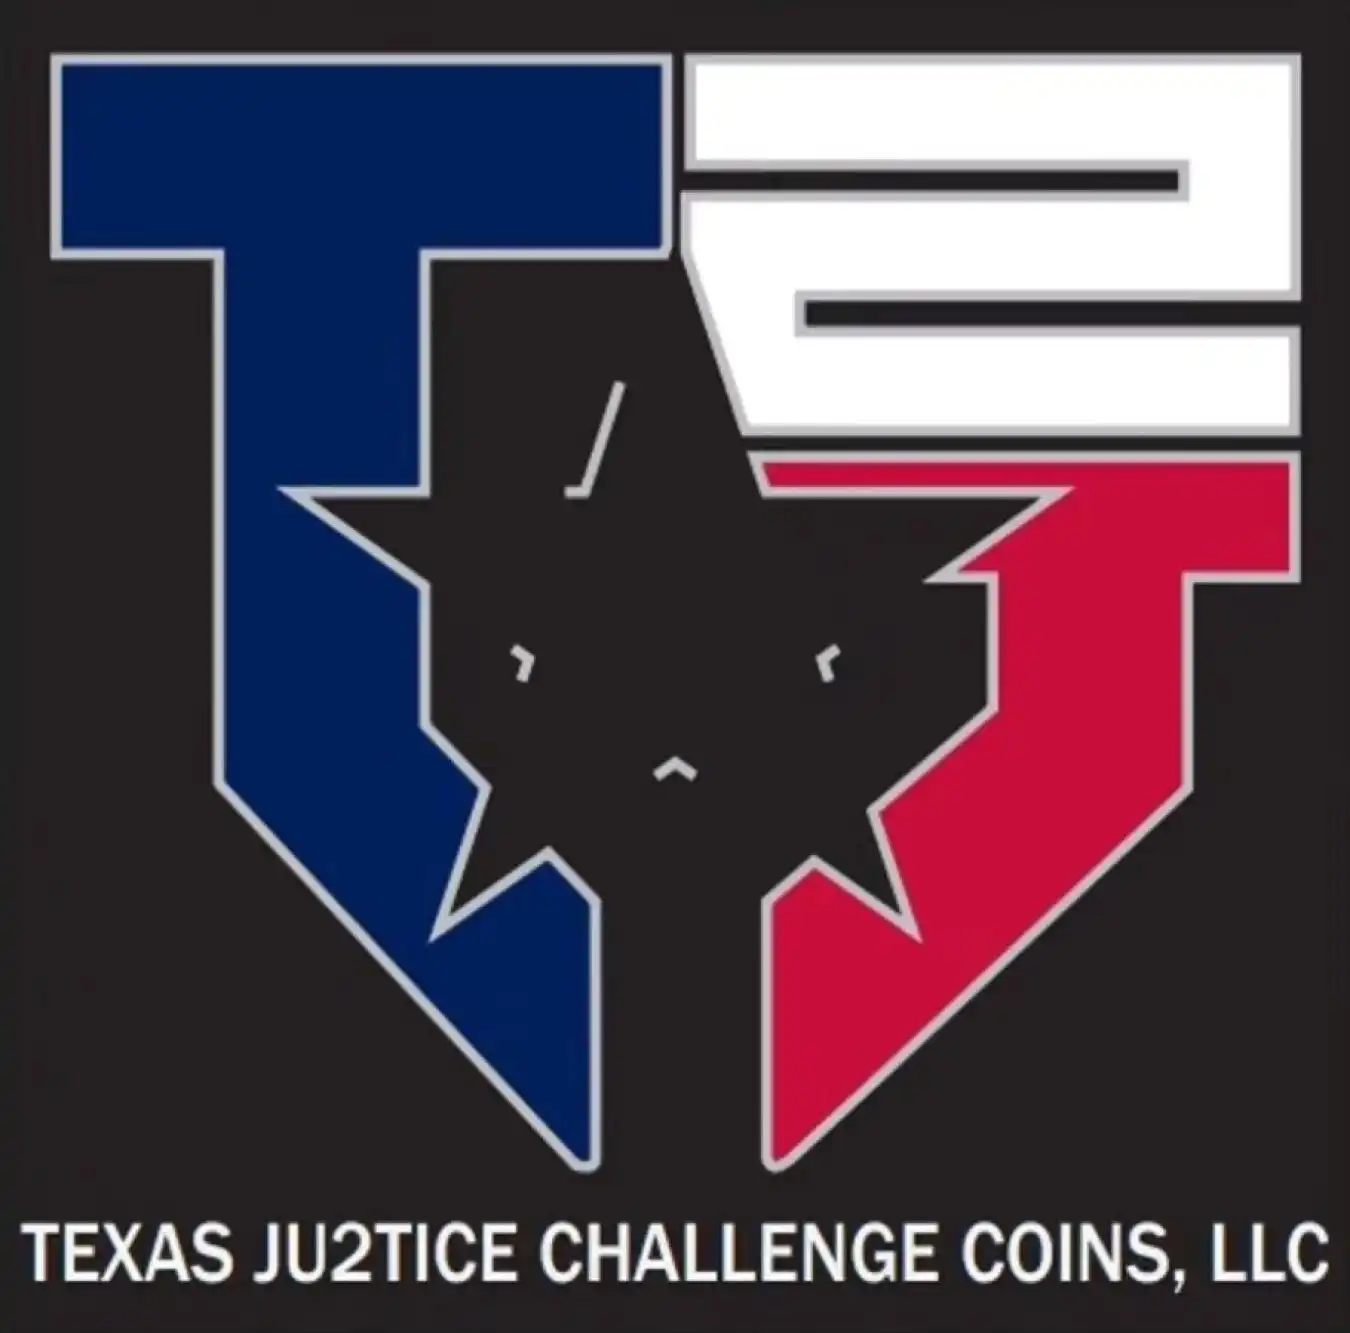 Texas Ju2tice Challenge Coins